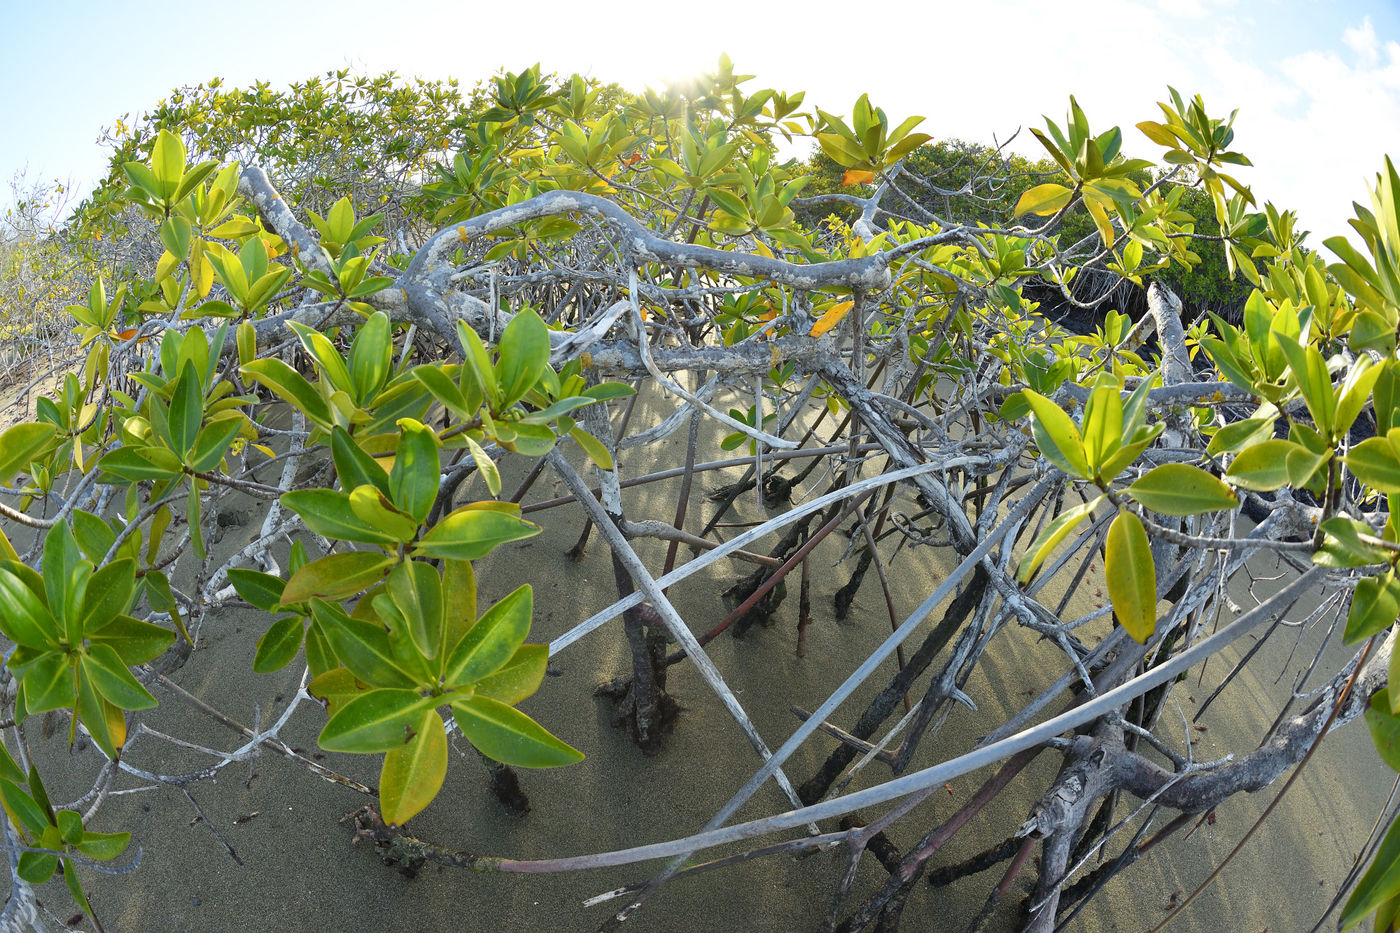 A young mangrove vegetation conquers the beach. © Yves Adams